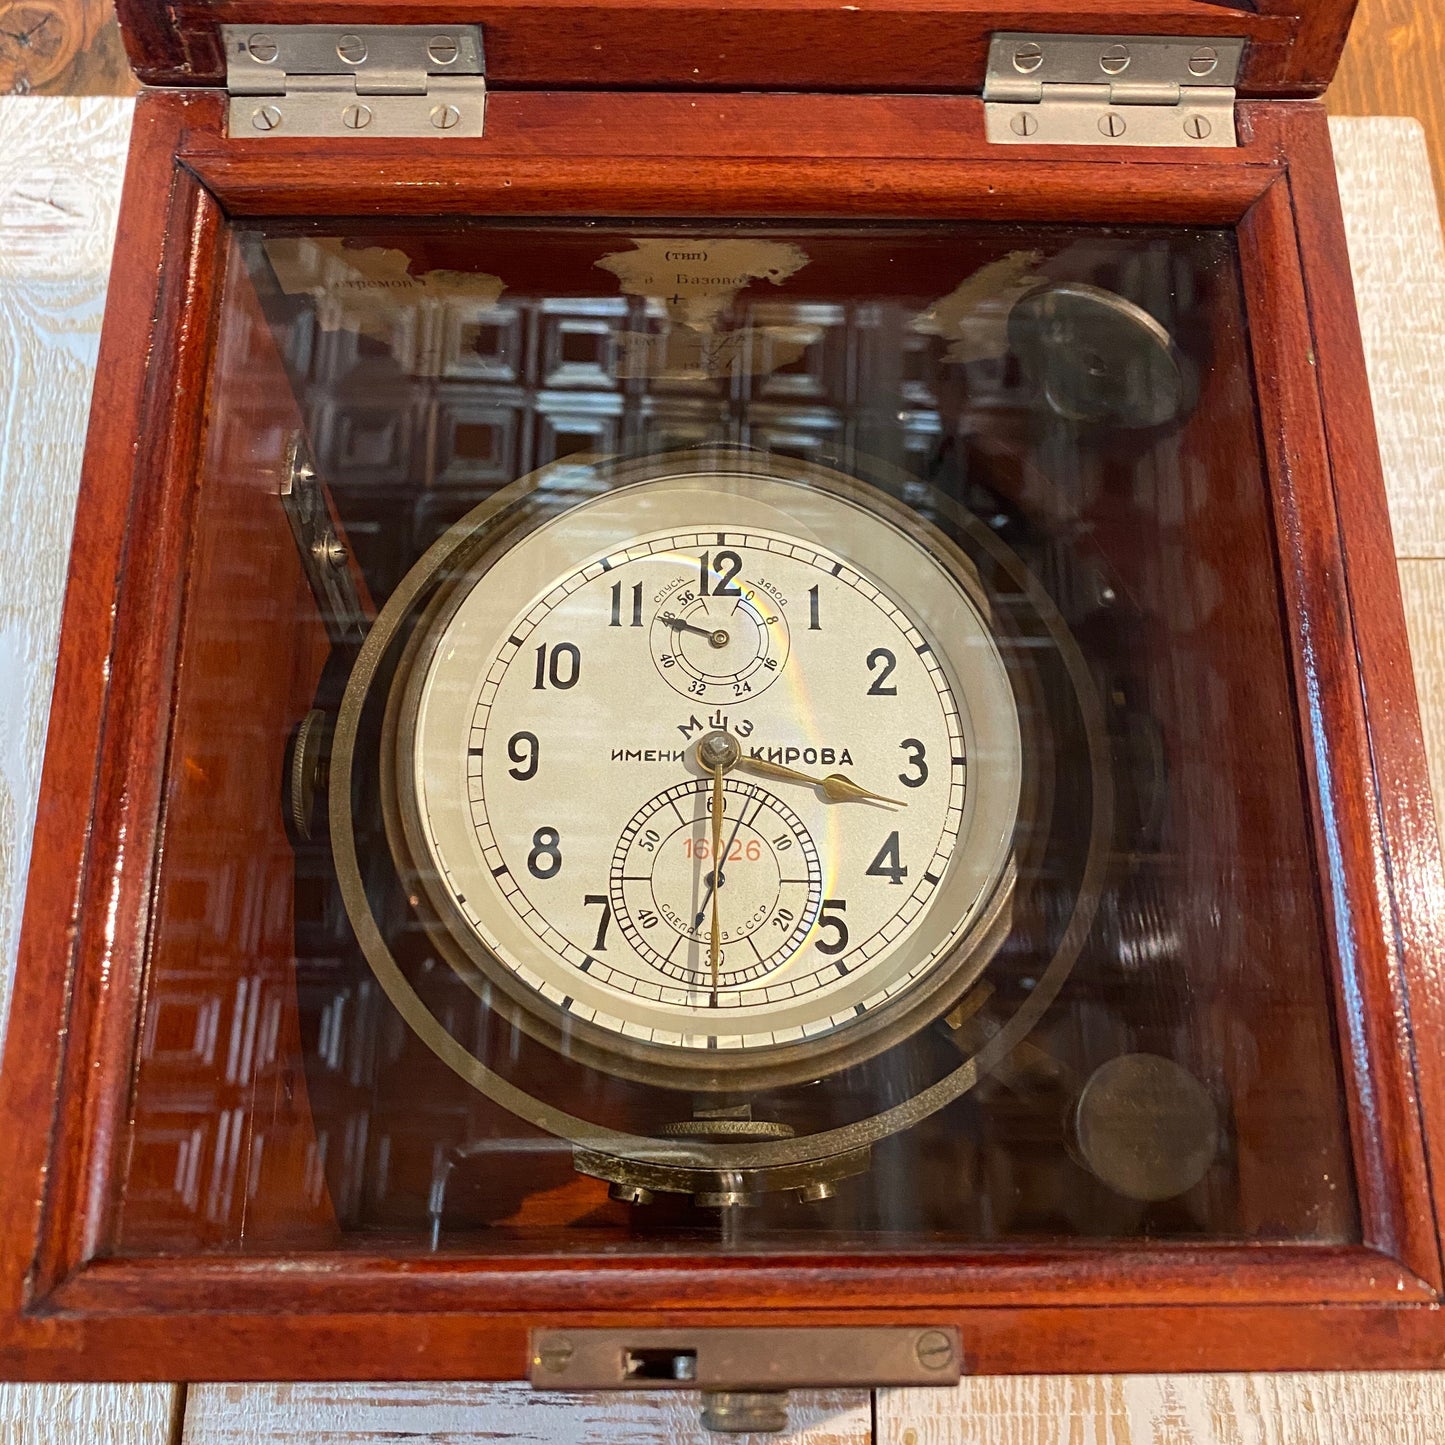 Russian Marine Chronometer - Annapolis Maritime Antiques